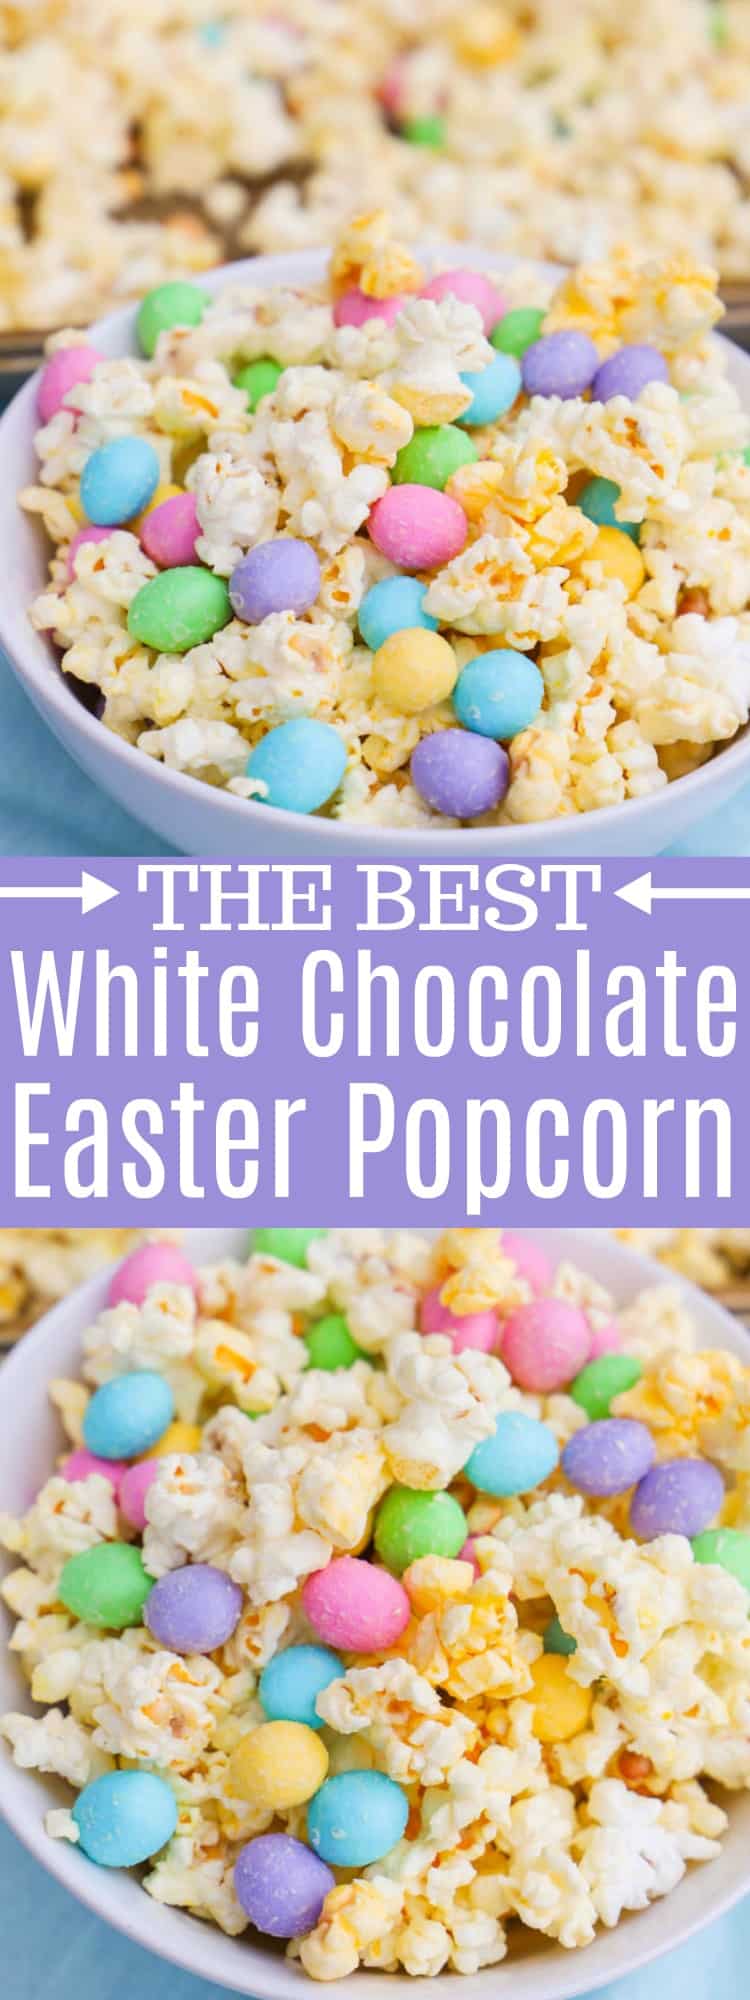 White Chocolate Easter Popcorn